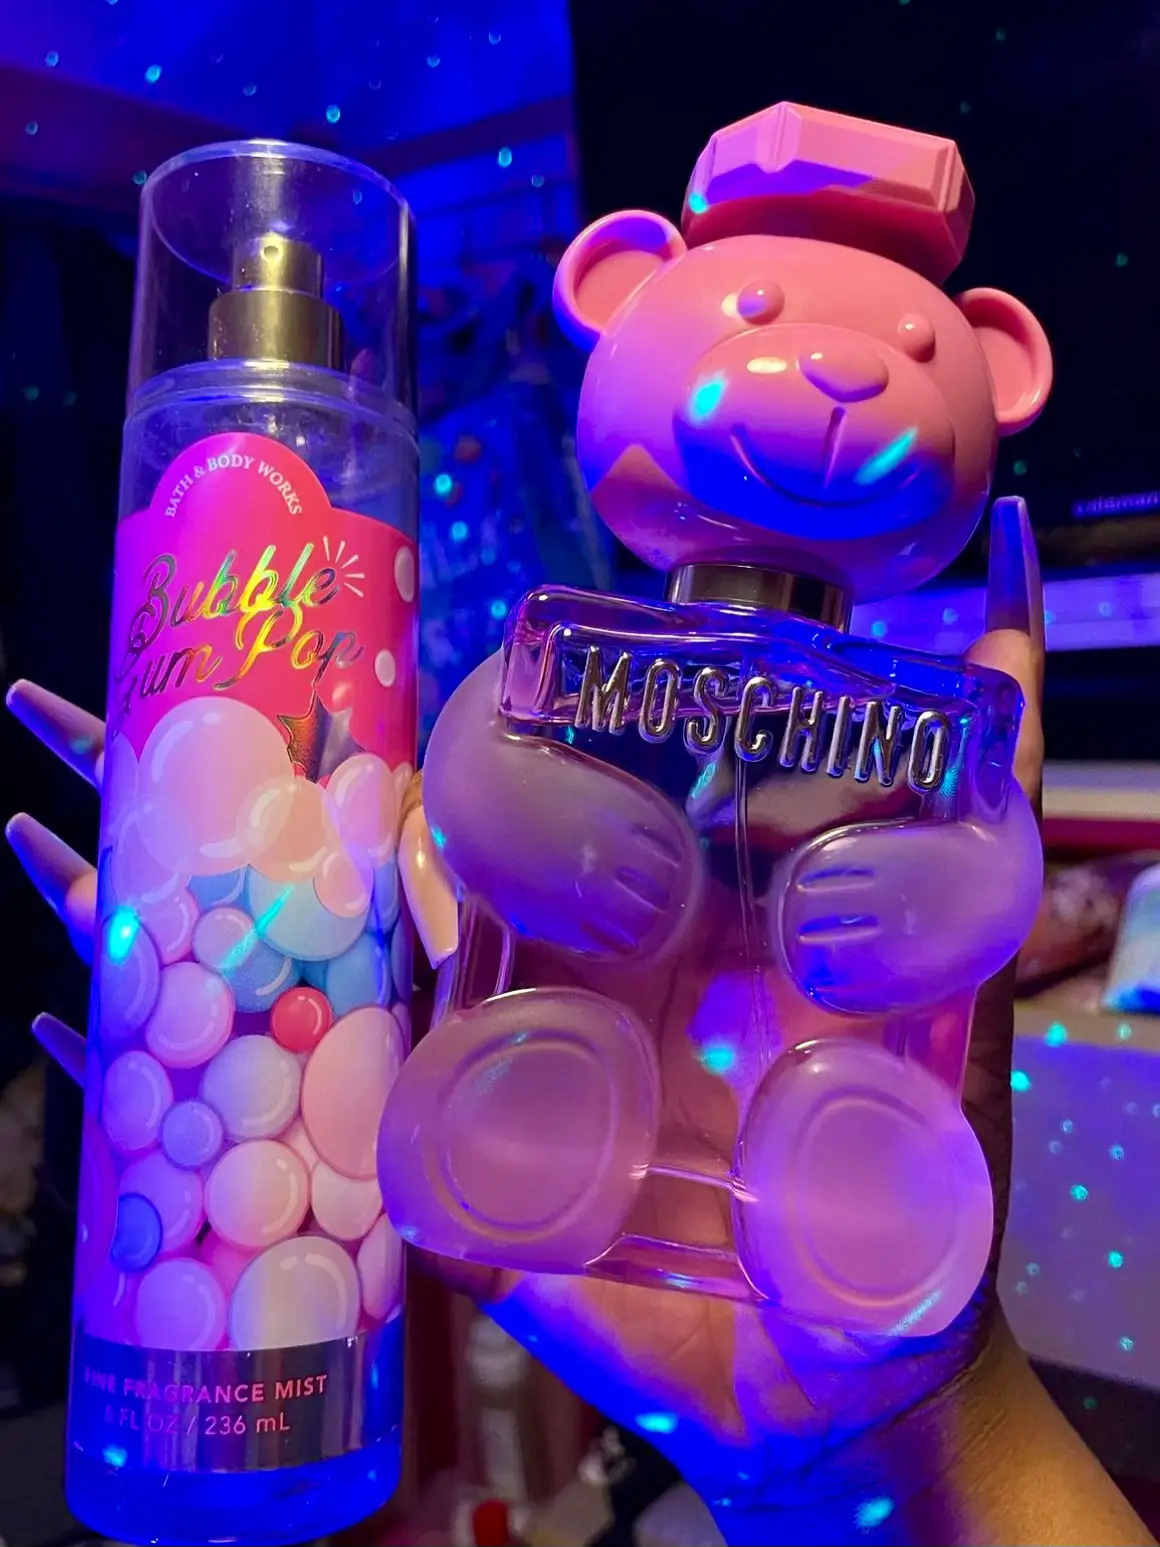 Moschino Toy 2 Bubble Gum Eau de Toilette Spray, Dillard's